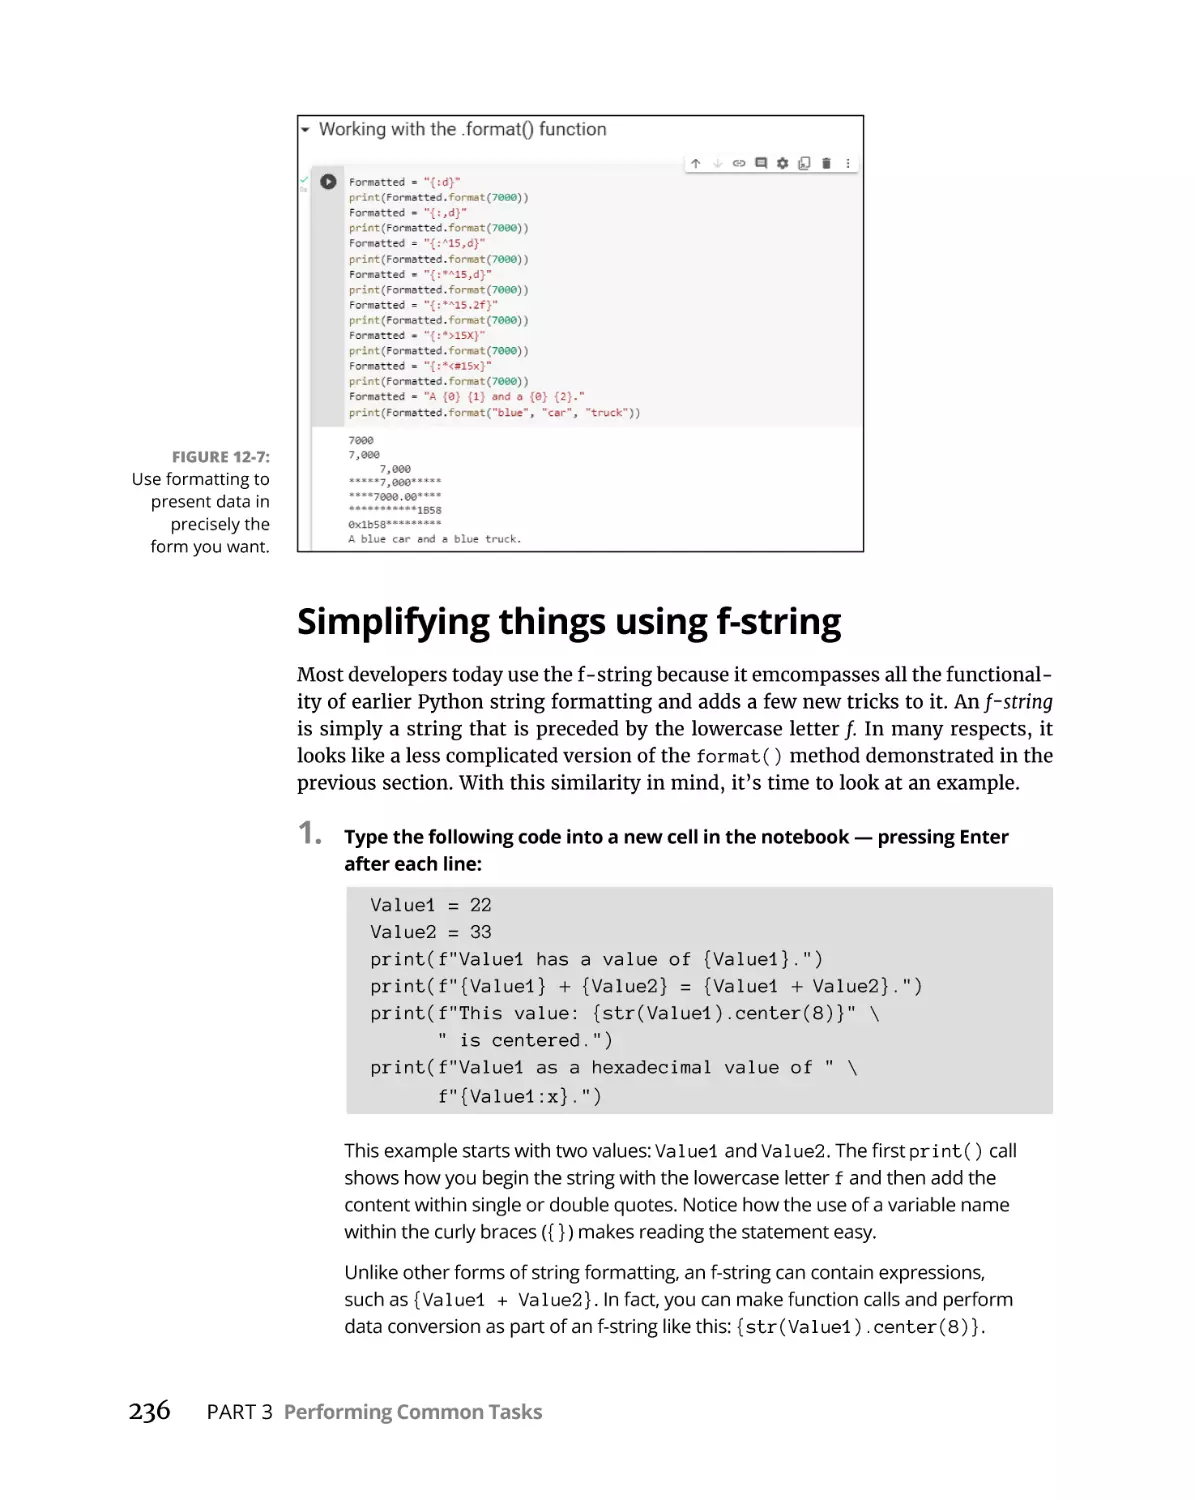 Simplifying things using f-string